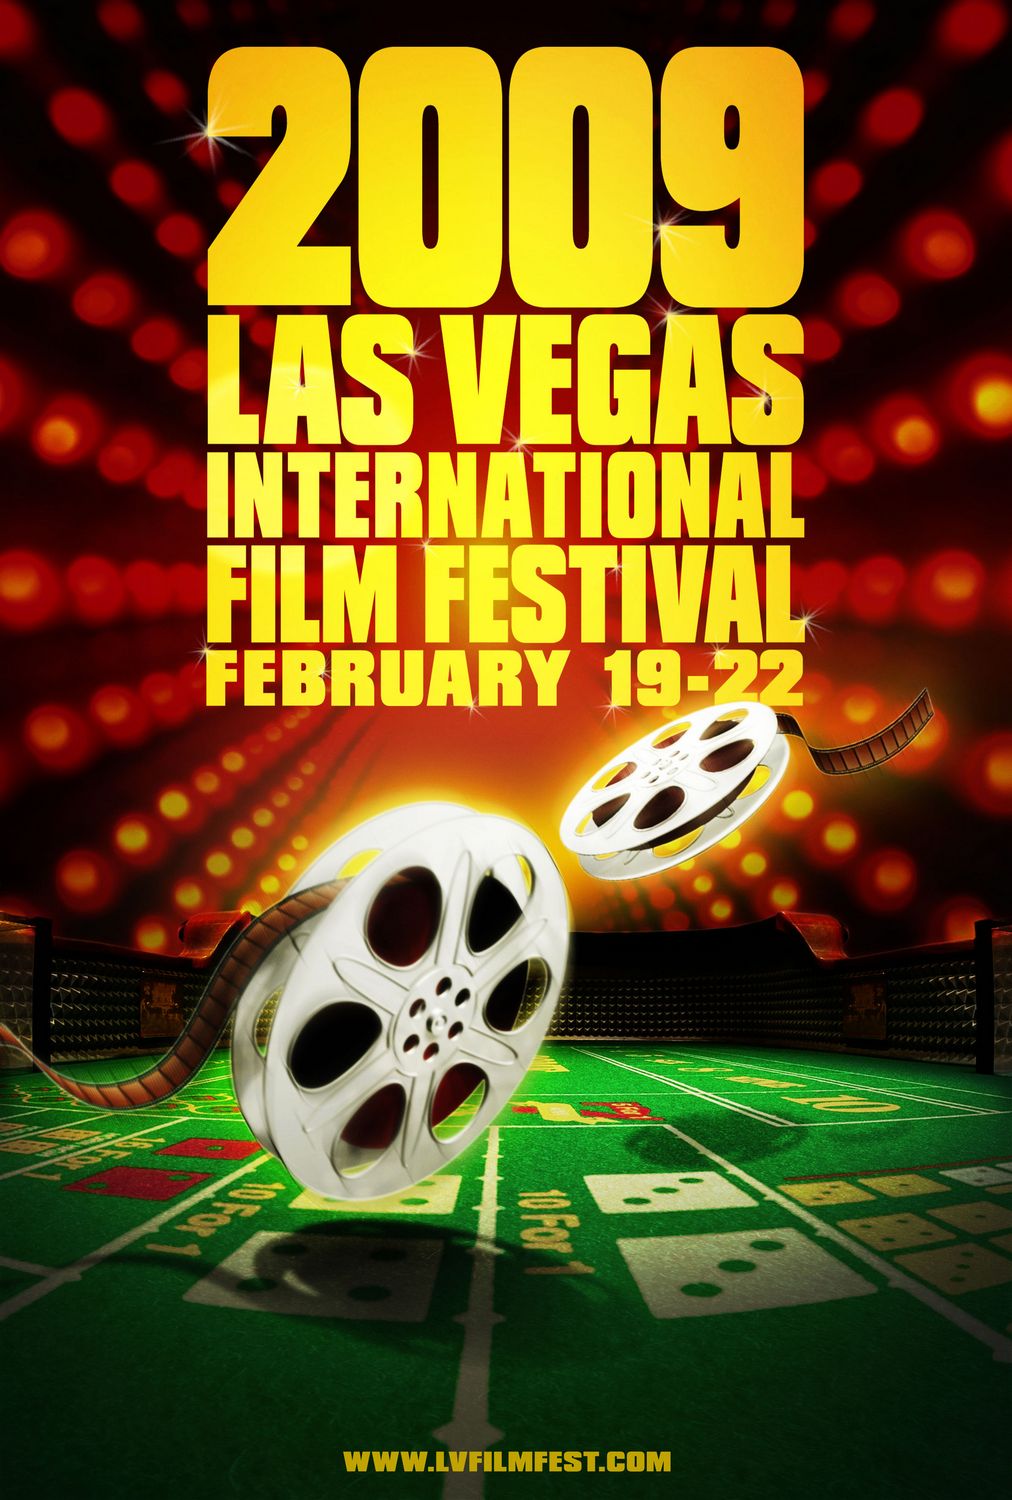 Extra Large TV Poster Image for Las Vegas International Film Festival (#2 of 2)